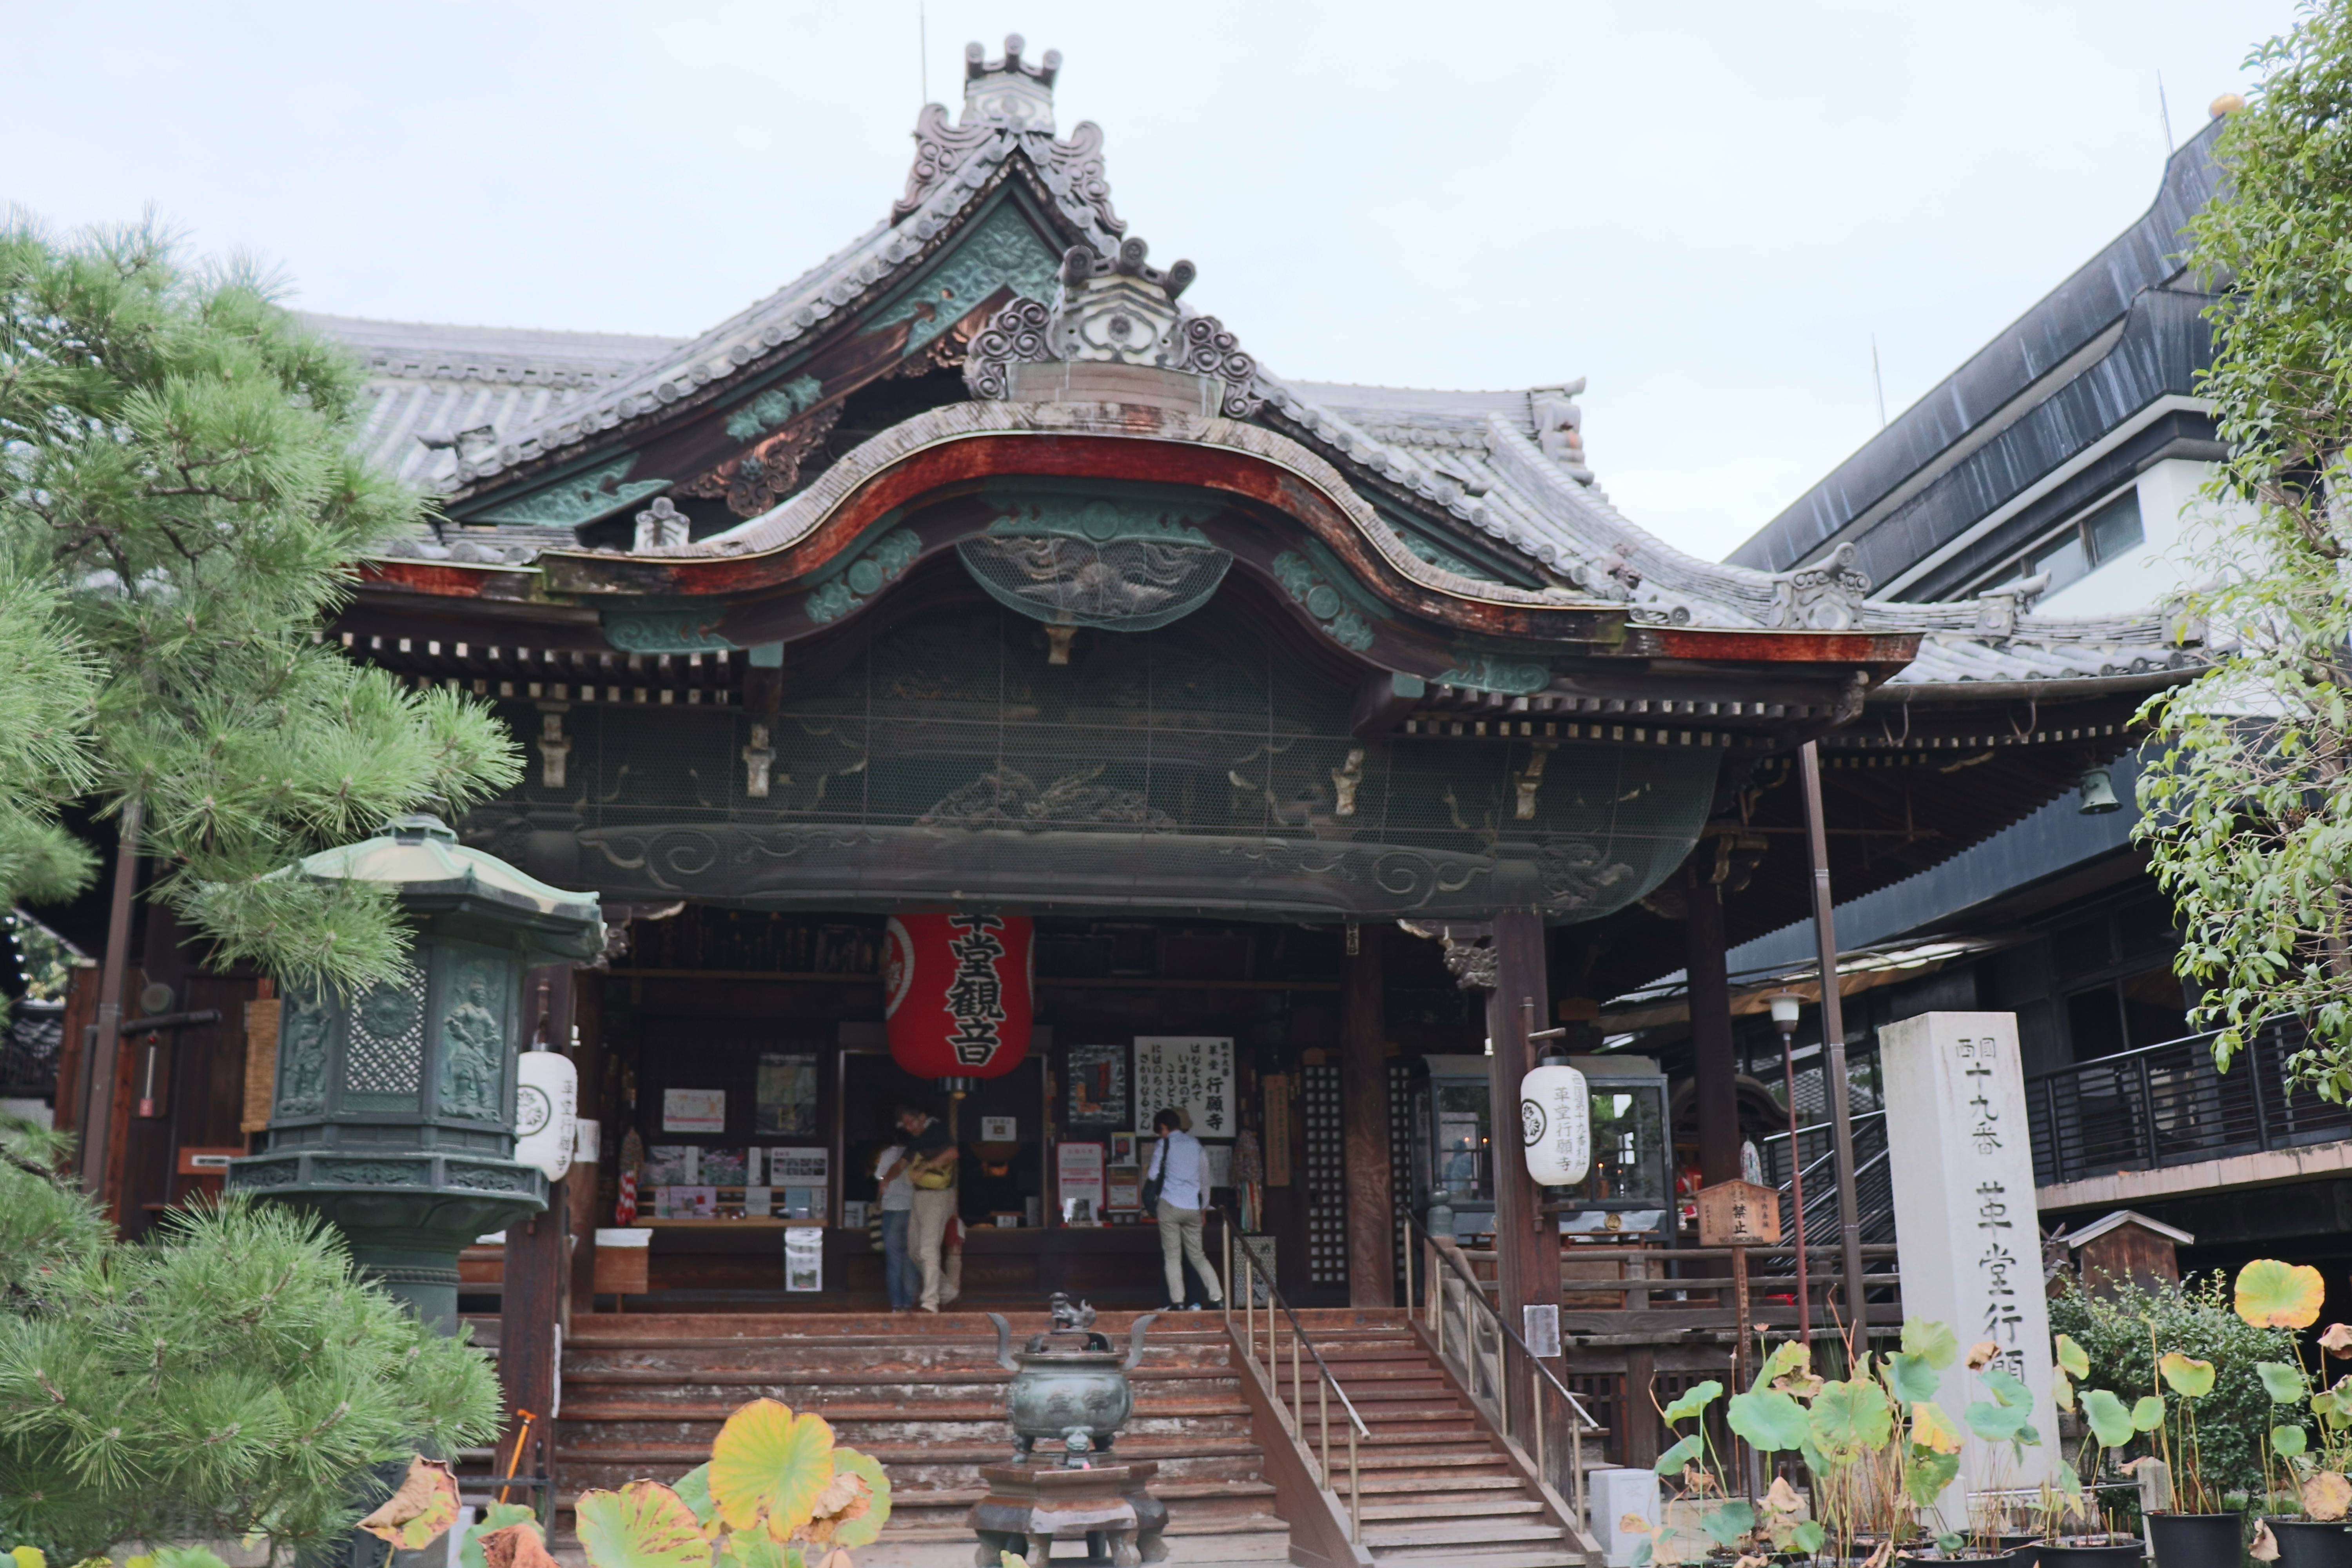 Hodo of Kodo Temple, Gyogan-ji framed with water lilies